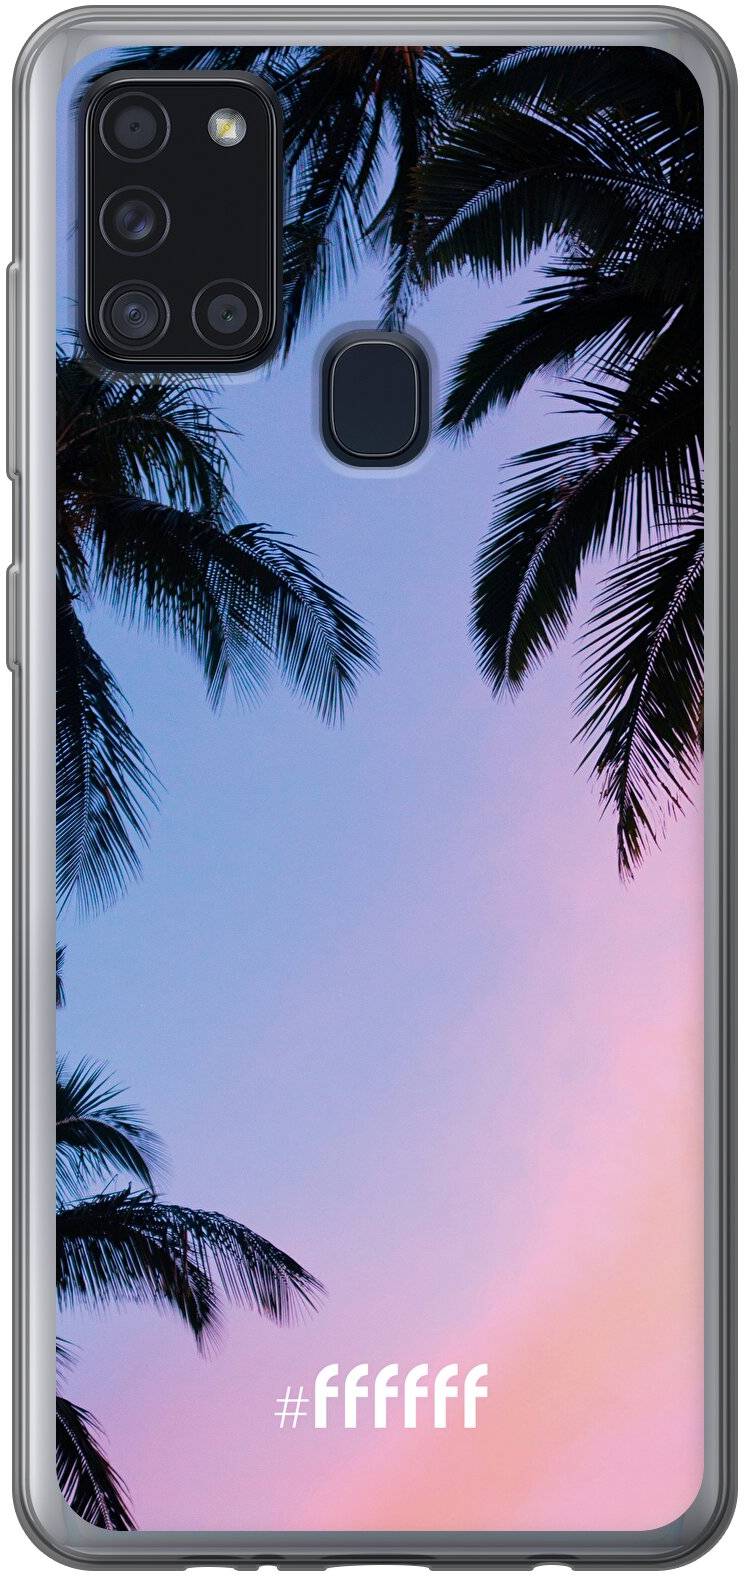 Sunset Palms Galaxy A21s